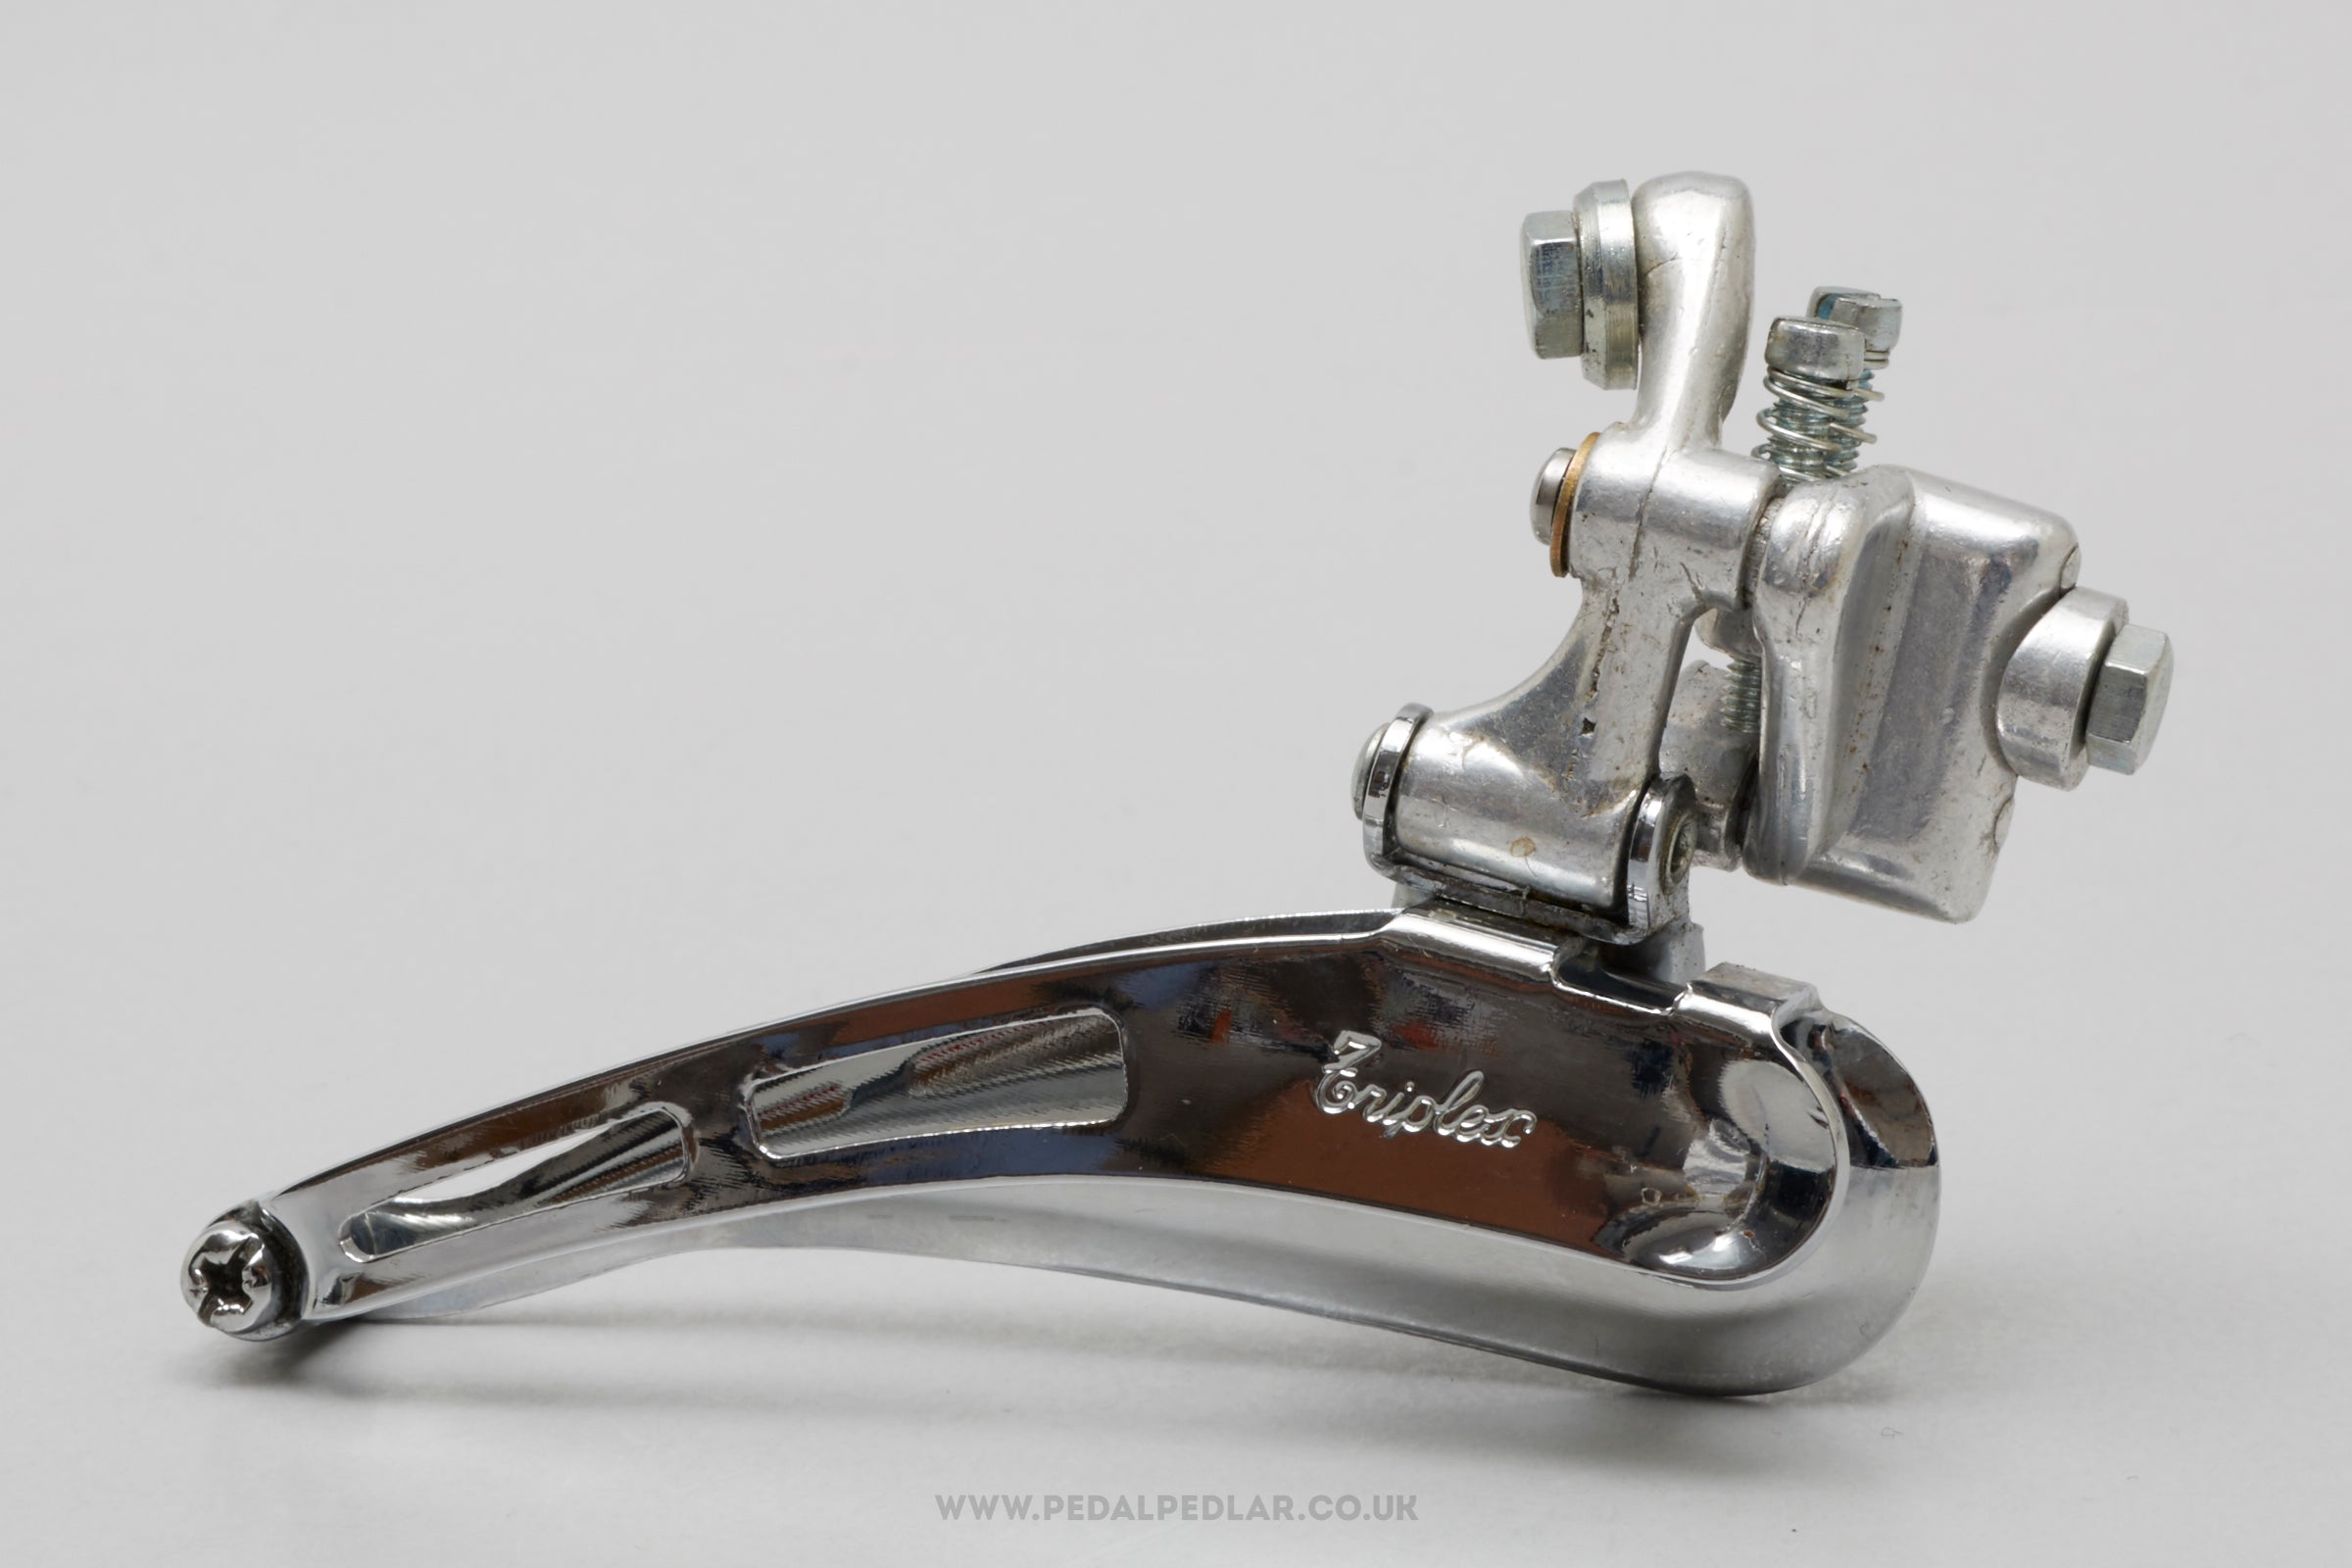 Triplex Profesional NOS Vintage Braze-On Front Derailleur - Pedal Pedlar - Buy New Old Stock Bike Parts